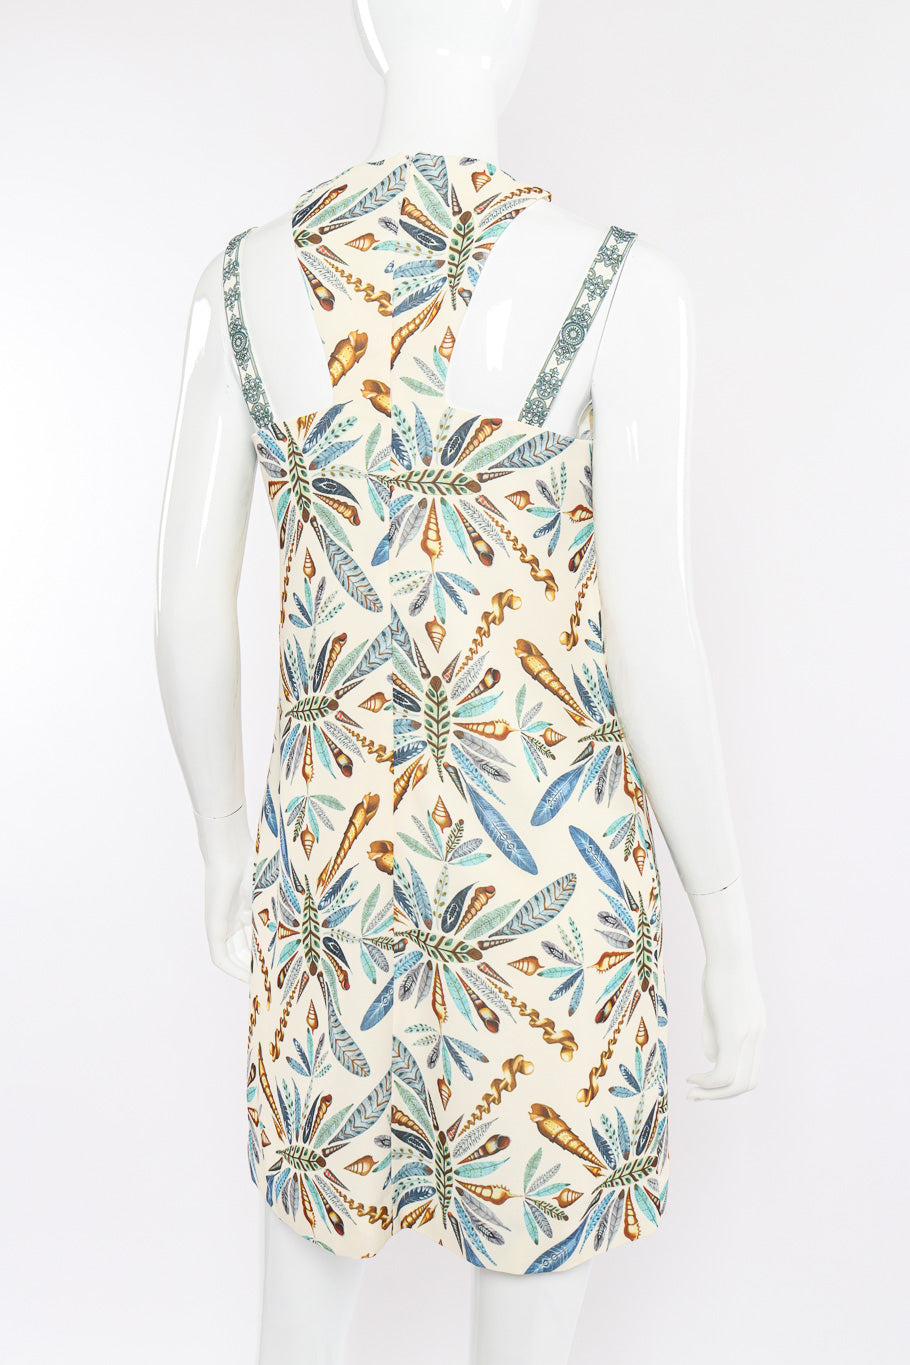 Versace Plume Print Mini Dress back view closeup on mannequin @Recessla